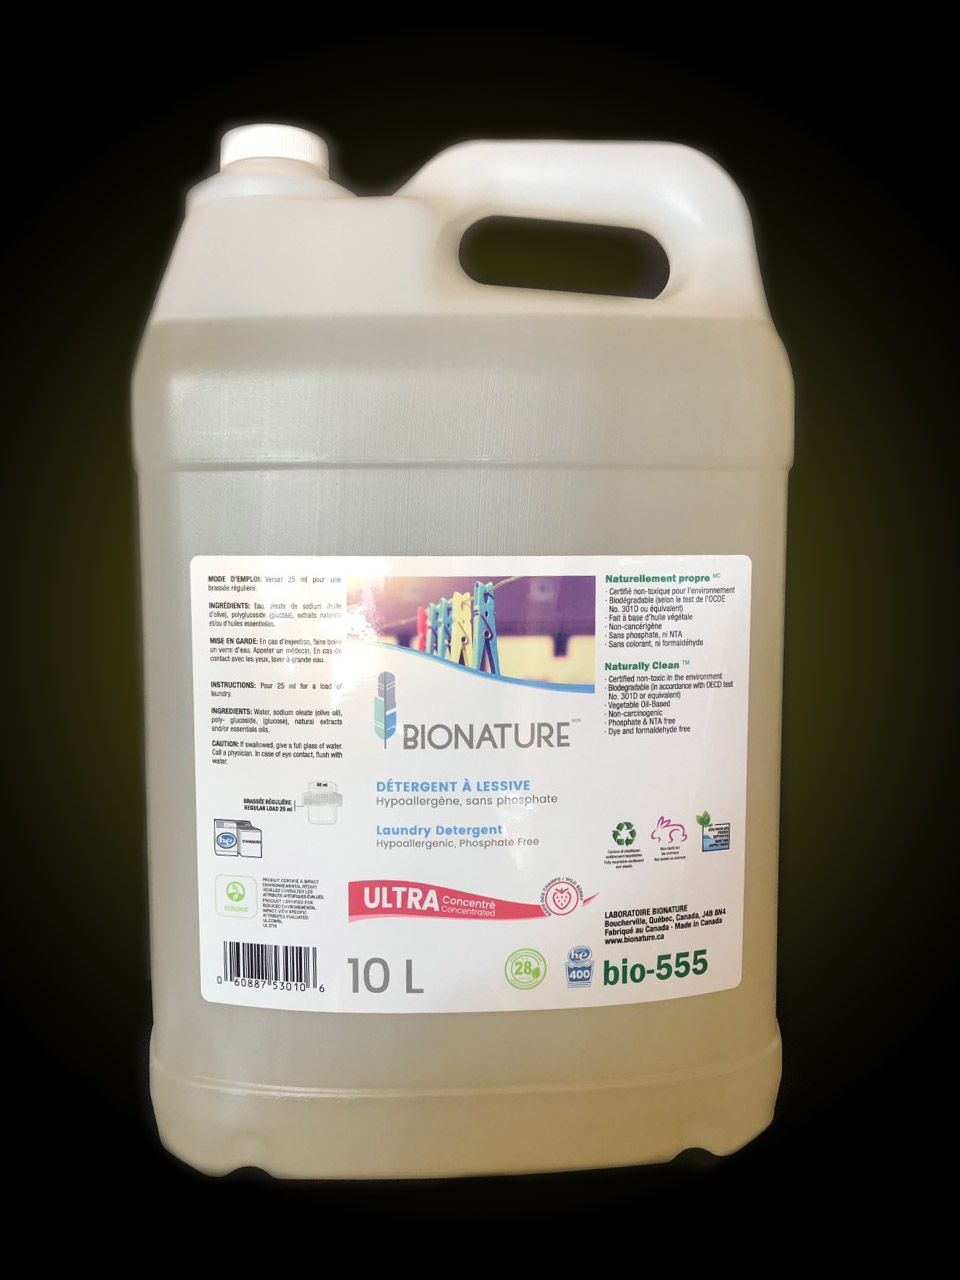 bionature detergent picture